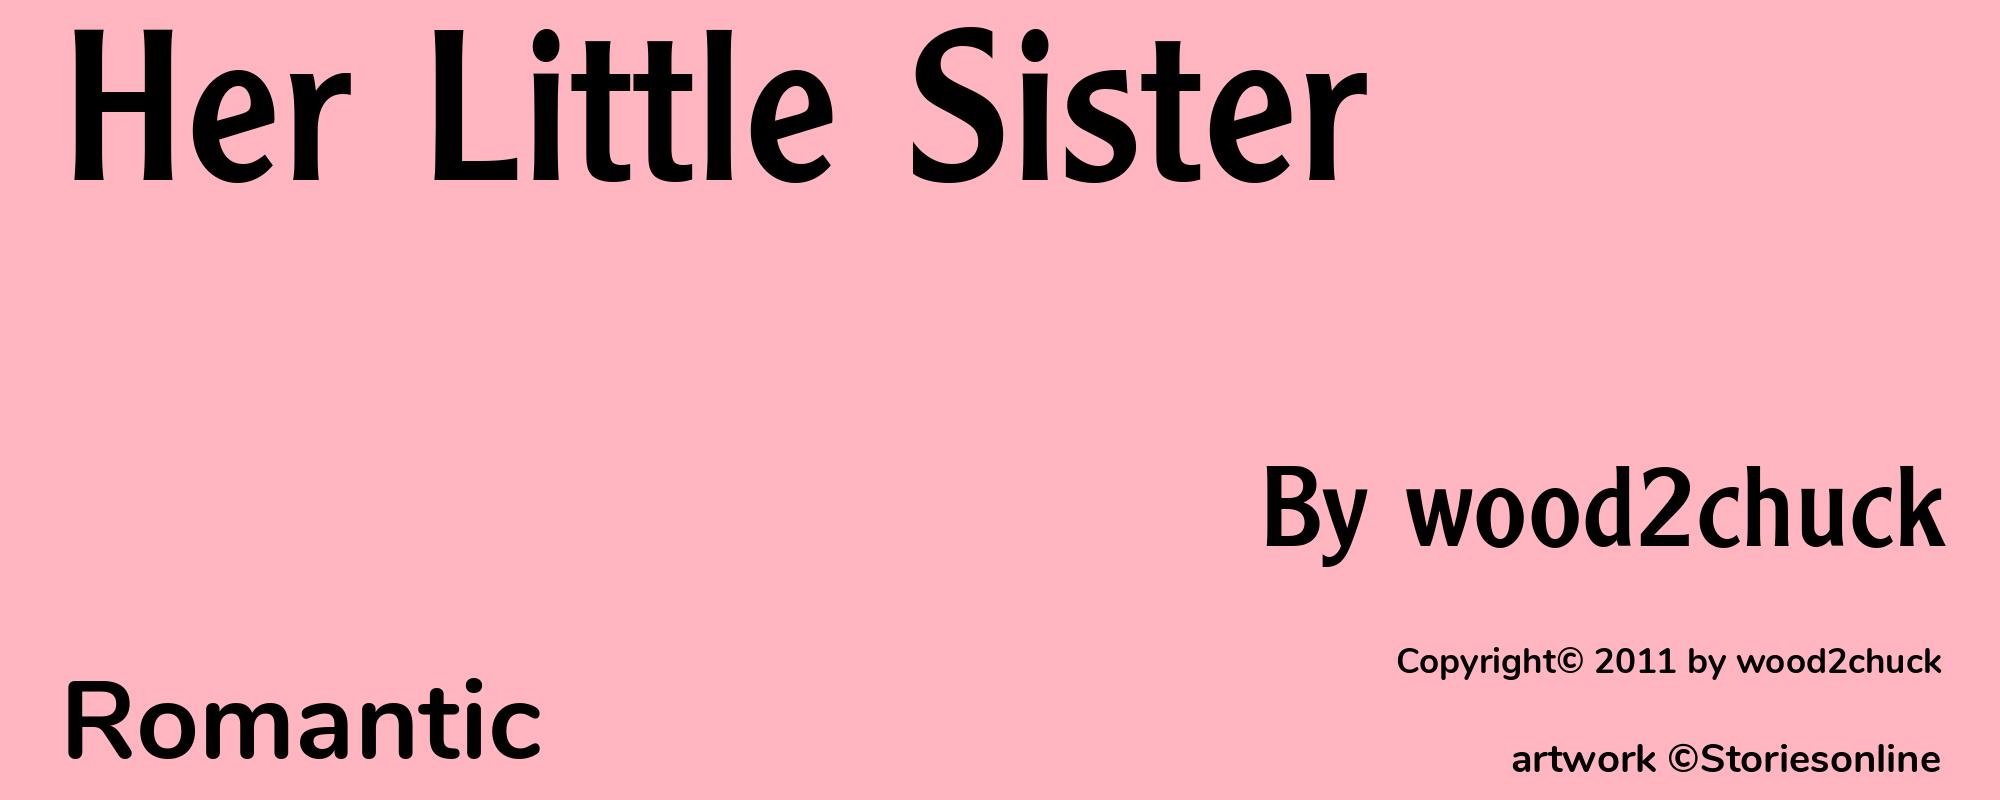 Her Little Sister - Cover